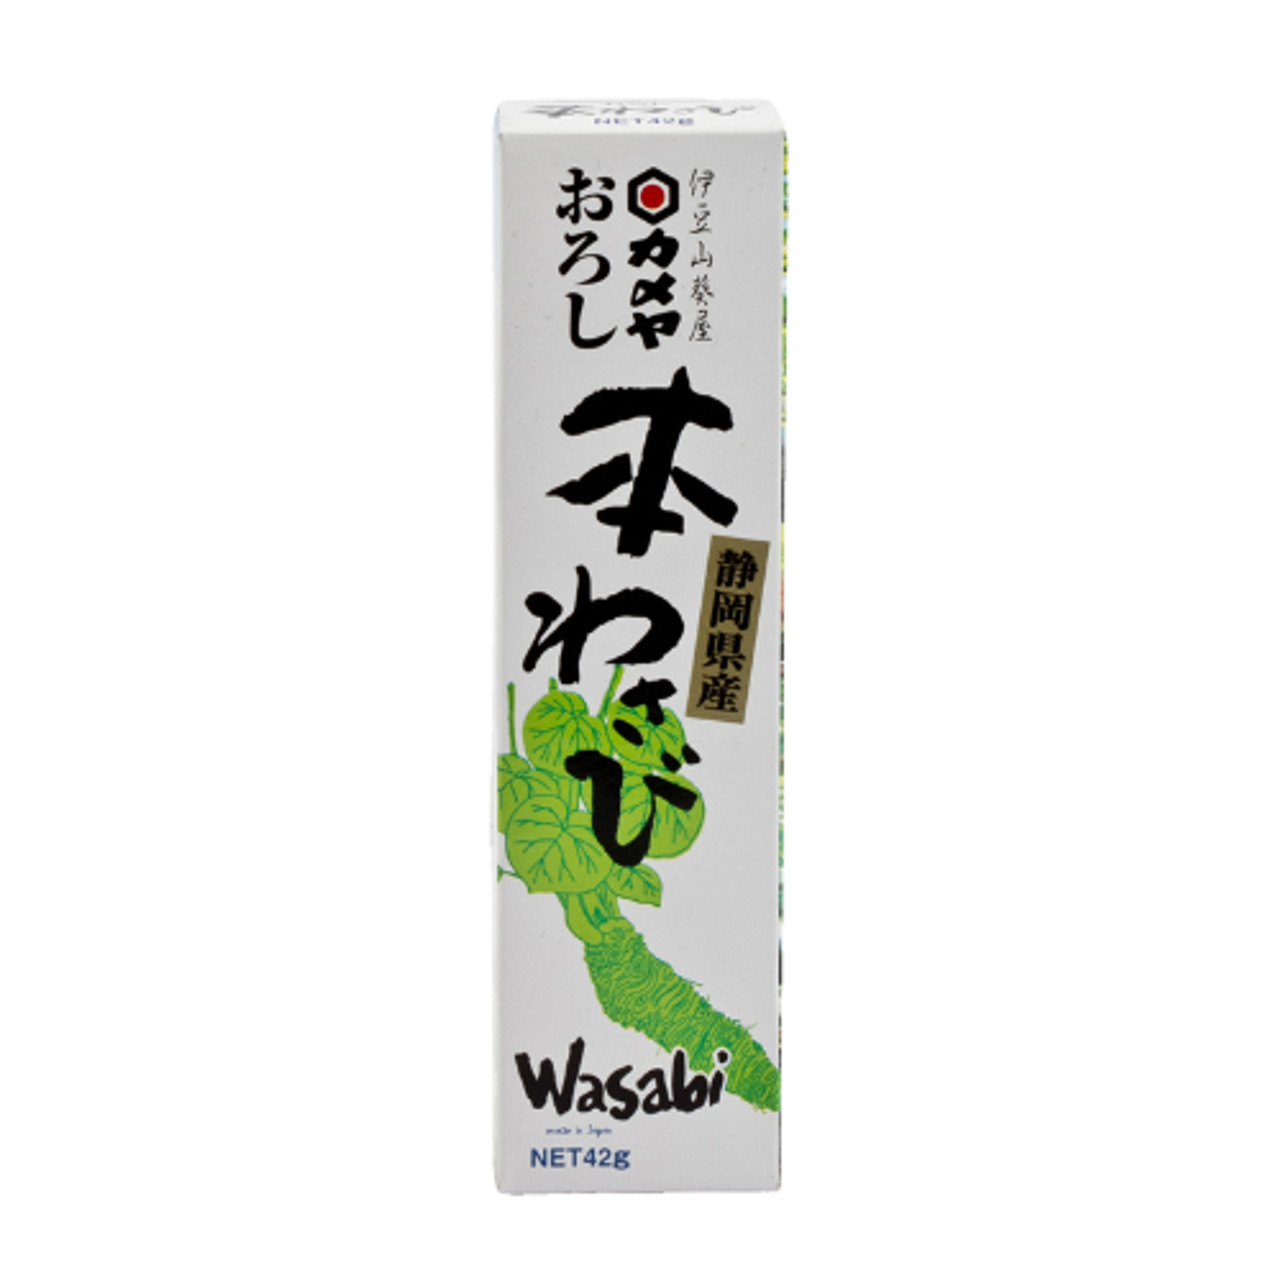 AGROBITS 20 X: Wasabi VIABLE- HORSE JAPONAIS - UK Stock 